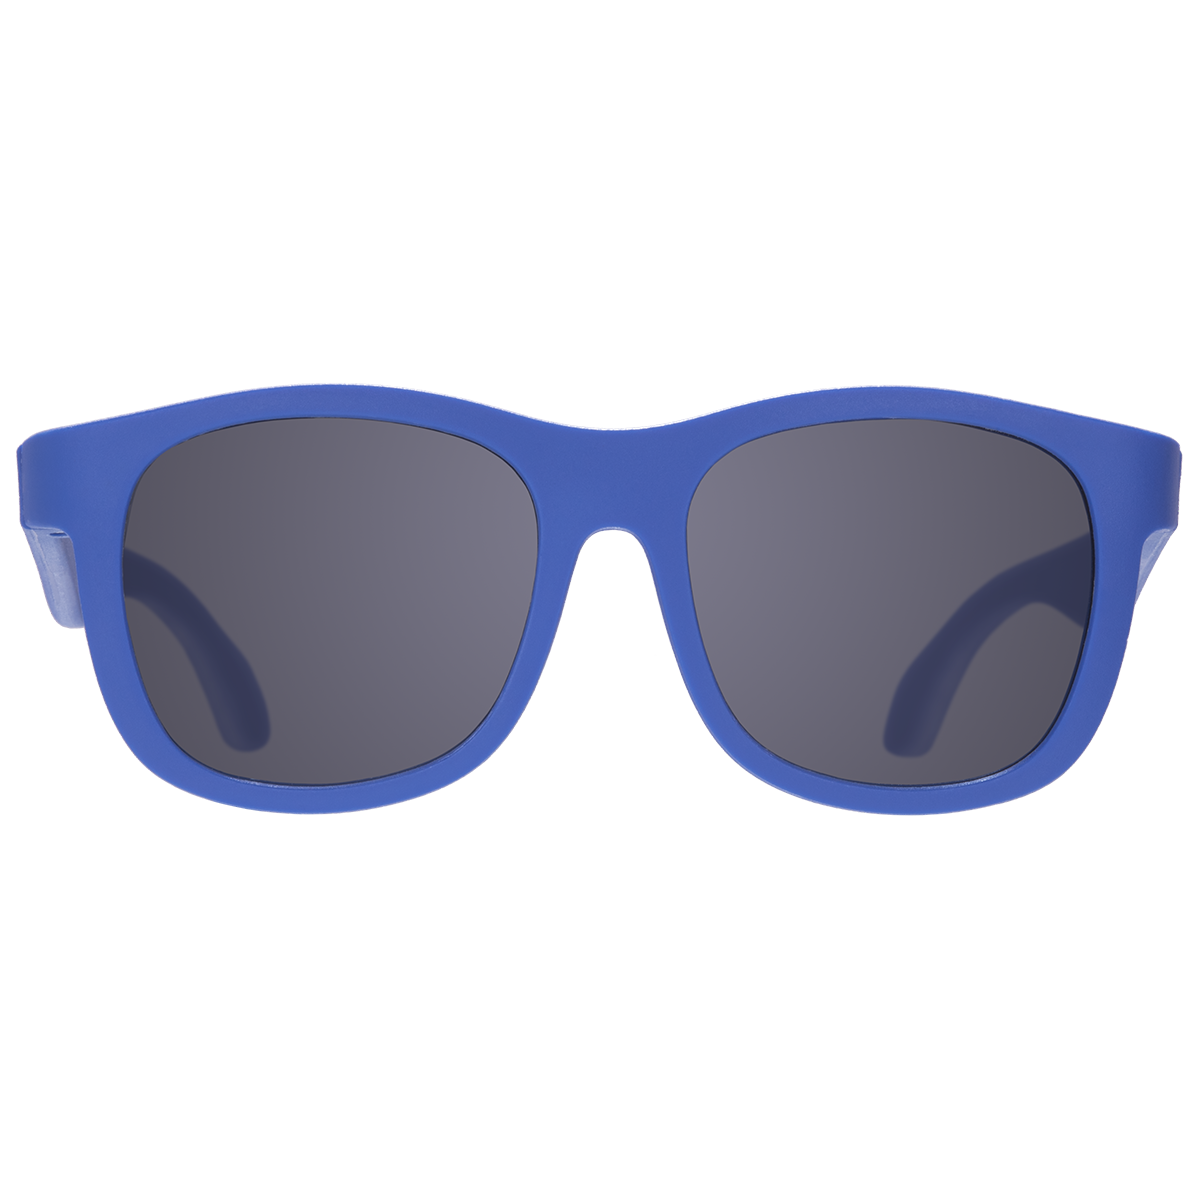 Navigator Sunglasses | Good As Blue